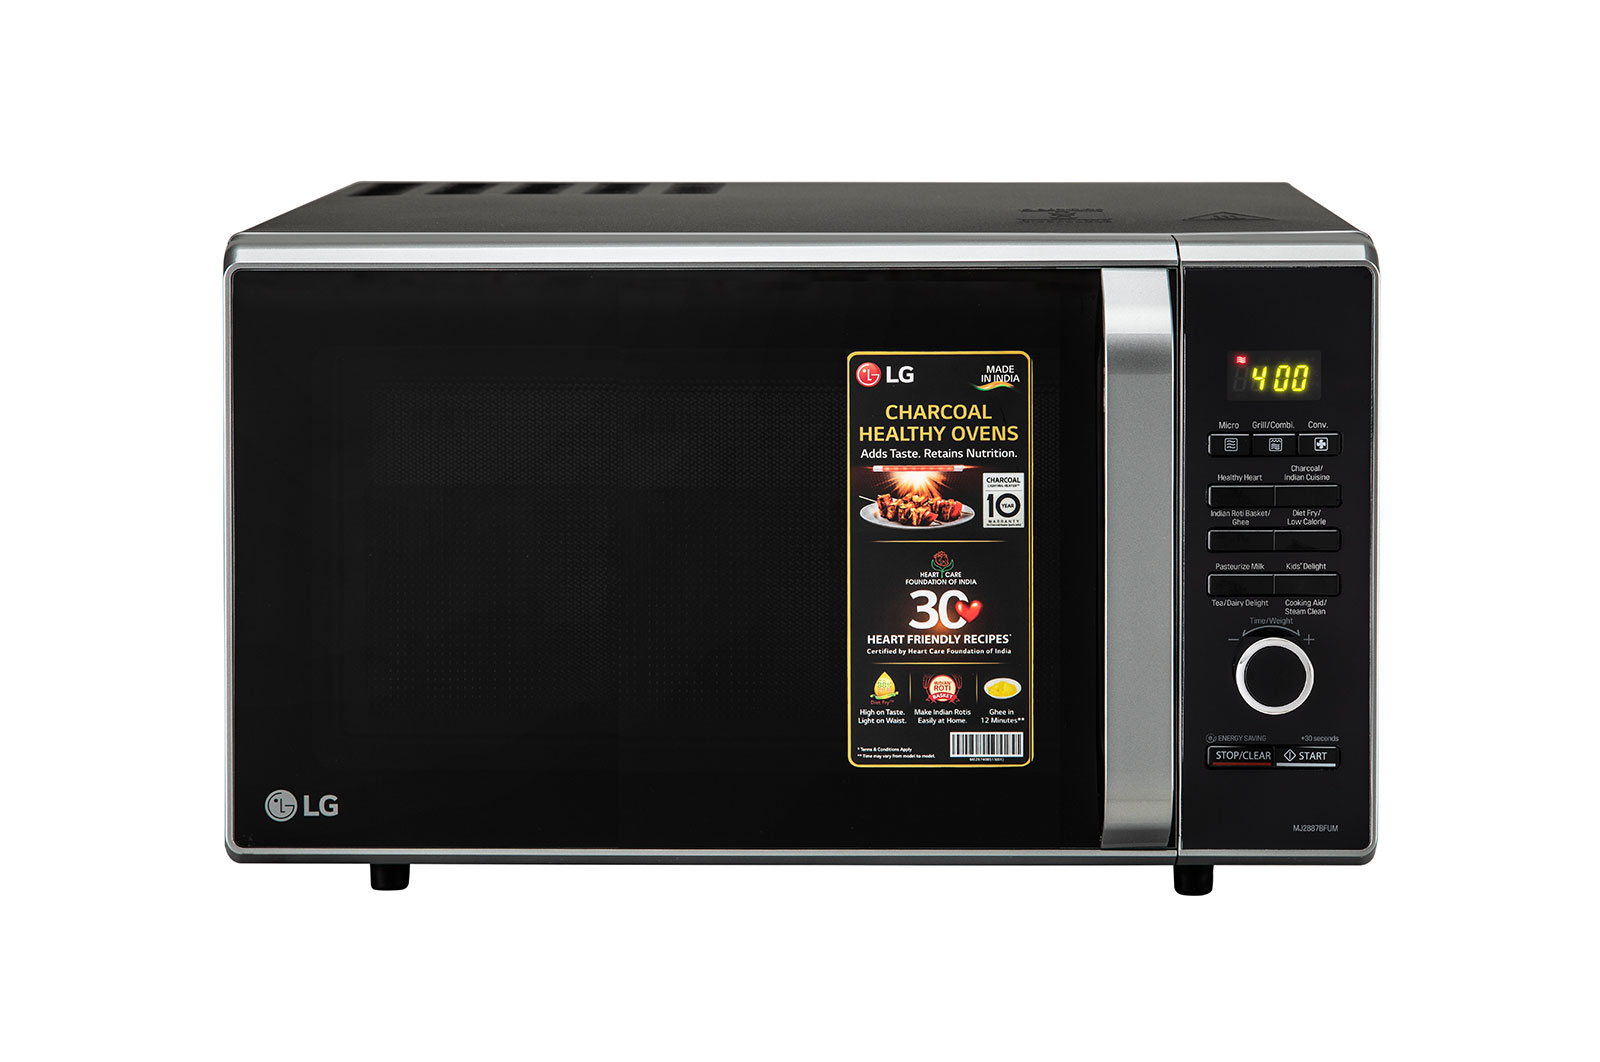 LG Charcoal Healthy Ovens, MJ2887BFUM